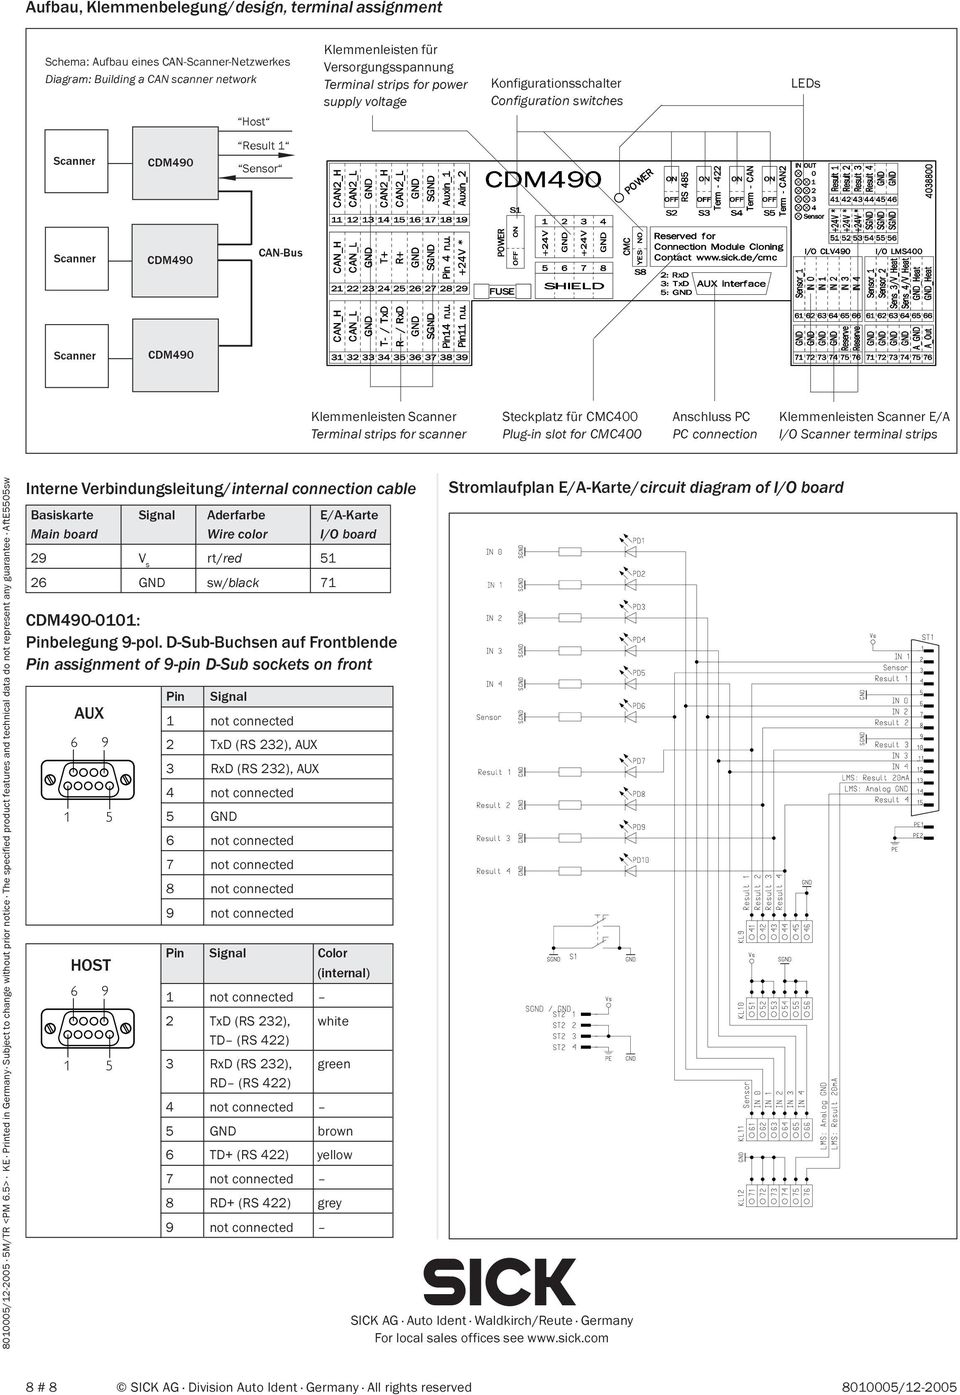 Steckplatz für CMC400 Plug-in slot for CMC400 Anschluss PC PC connection Klemmenleisten Scanner E/A I/O Scanner terminal strips 8010005/12-2005 5M/TR <PM 6.